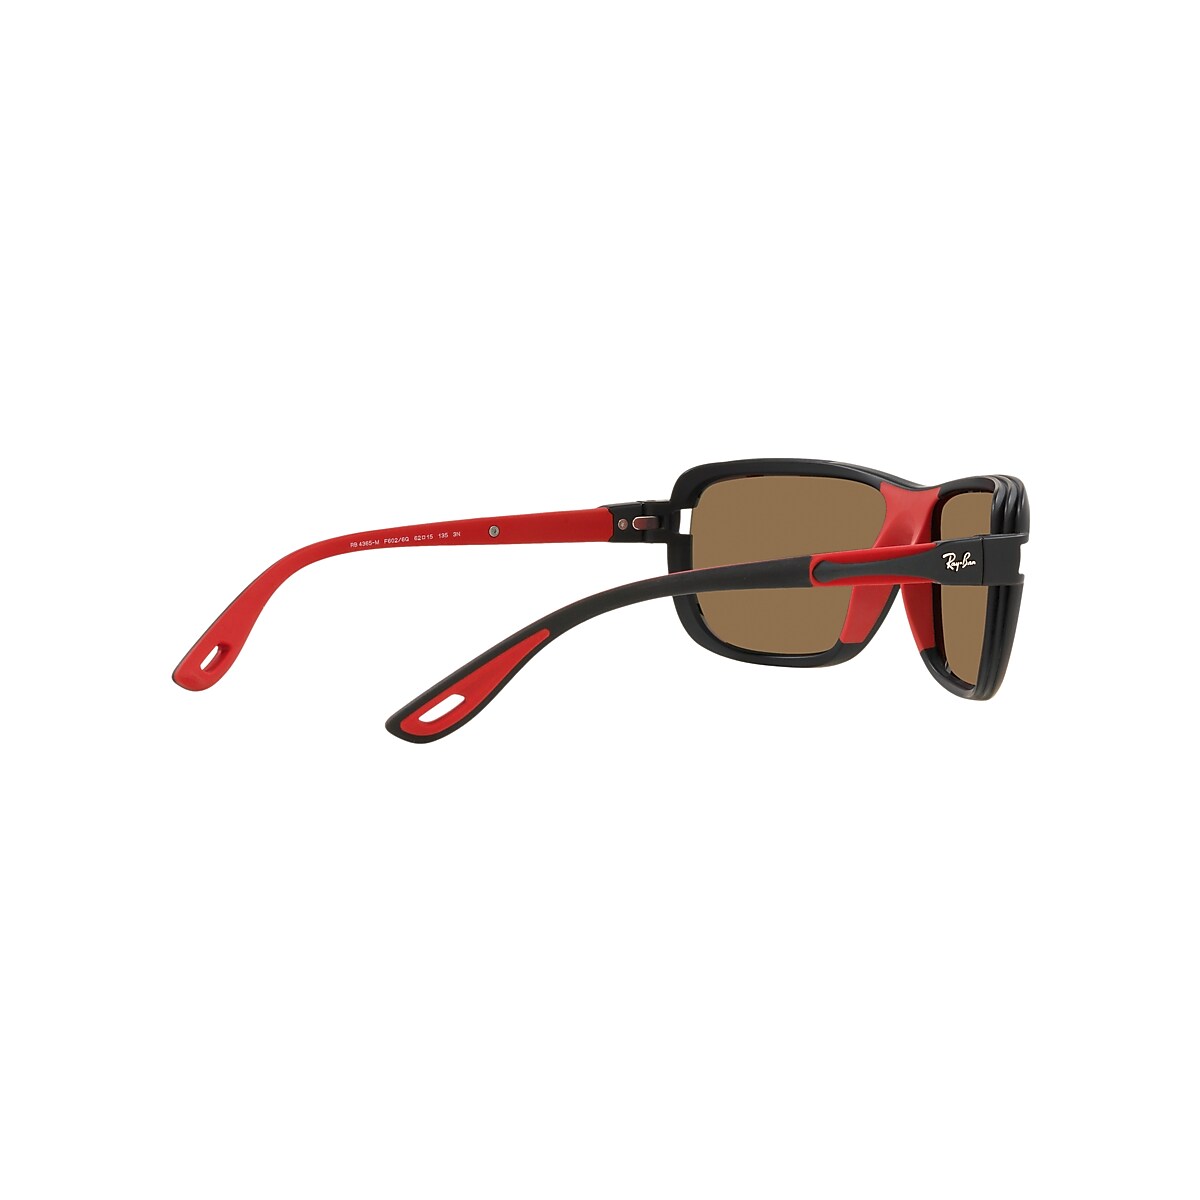 Rb4365m Scuderia Ferrari Collection Sunglasses in Black and Red | Ray-Ban®